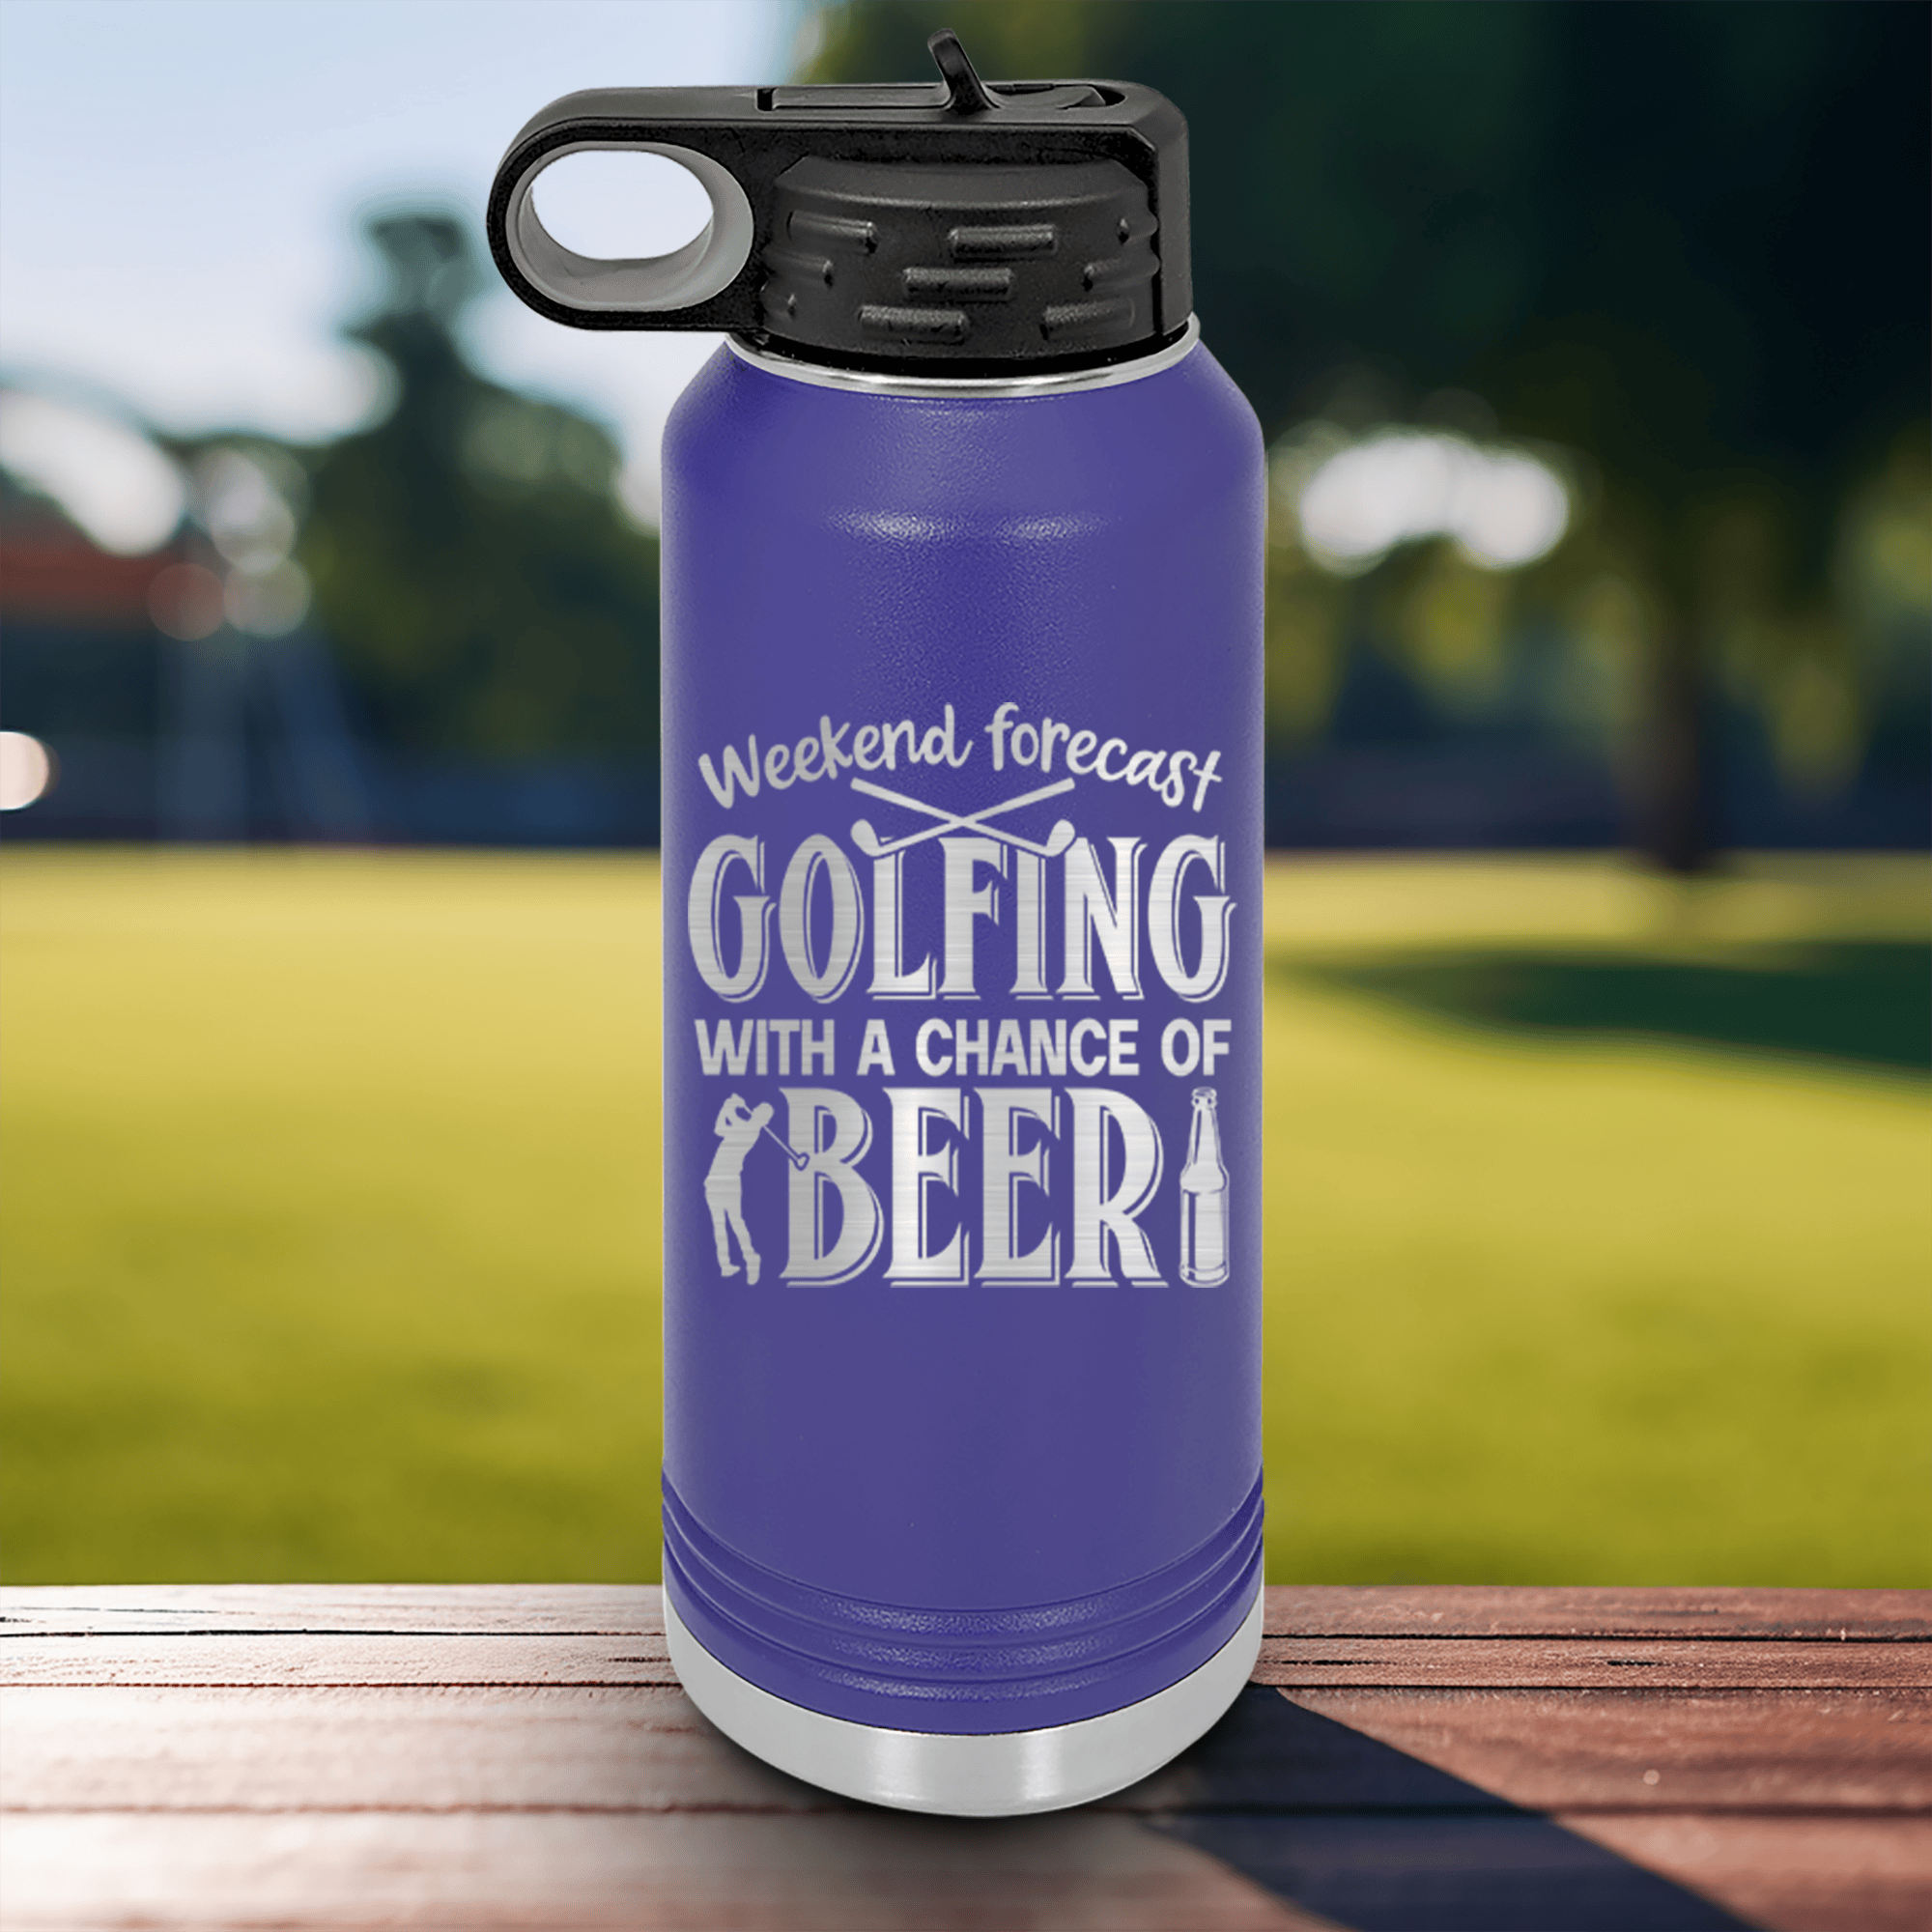 Variety Pack - Beer Bottle Golf Tees - Thirsty Golfers